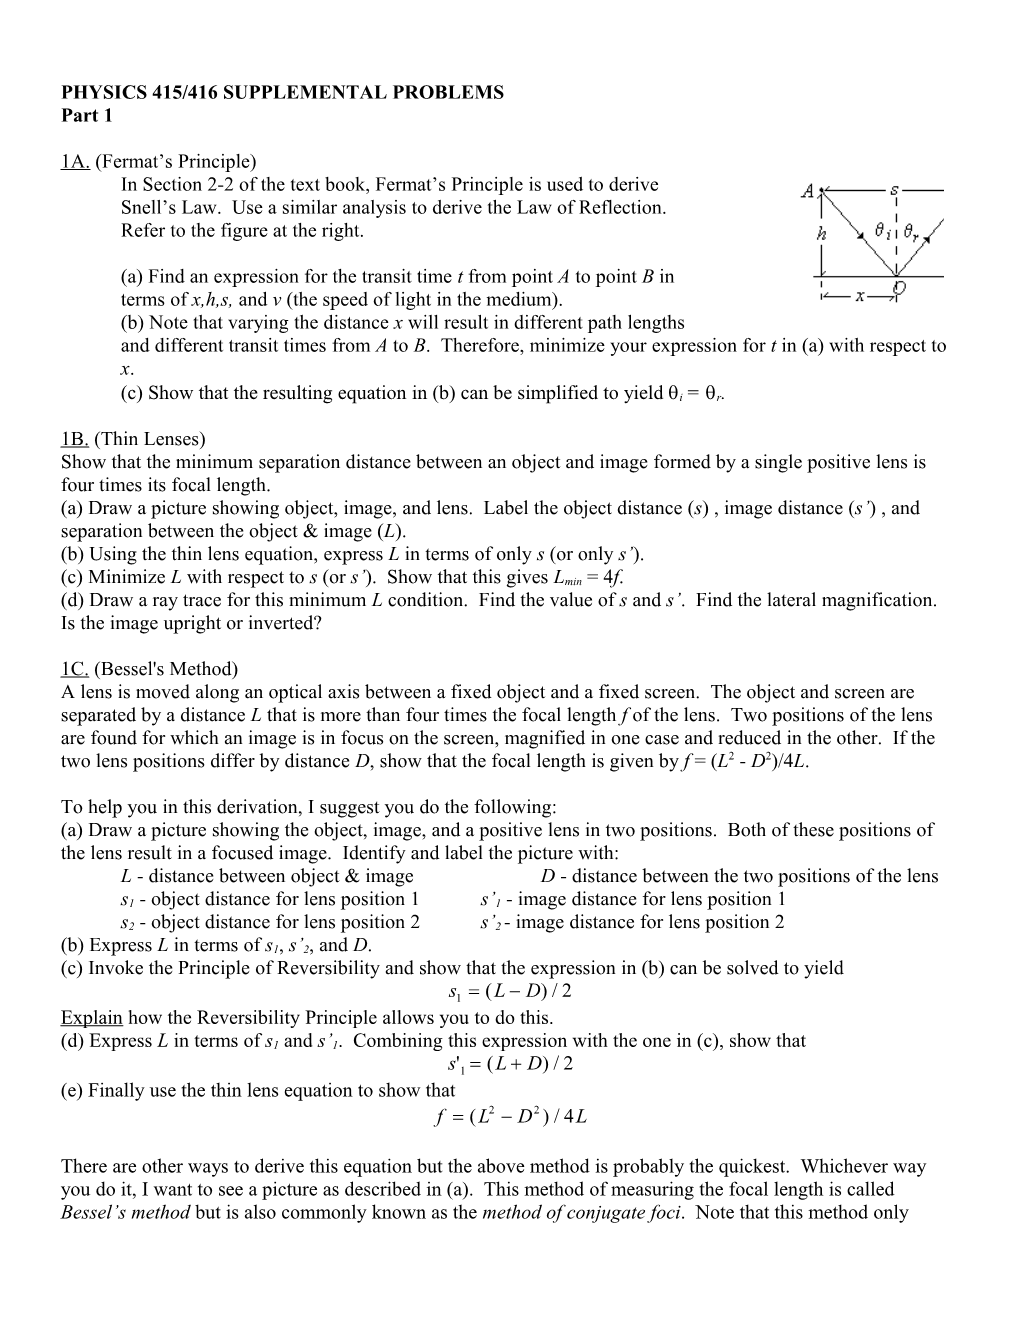 Physics 415 Supplemental Problems